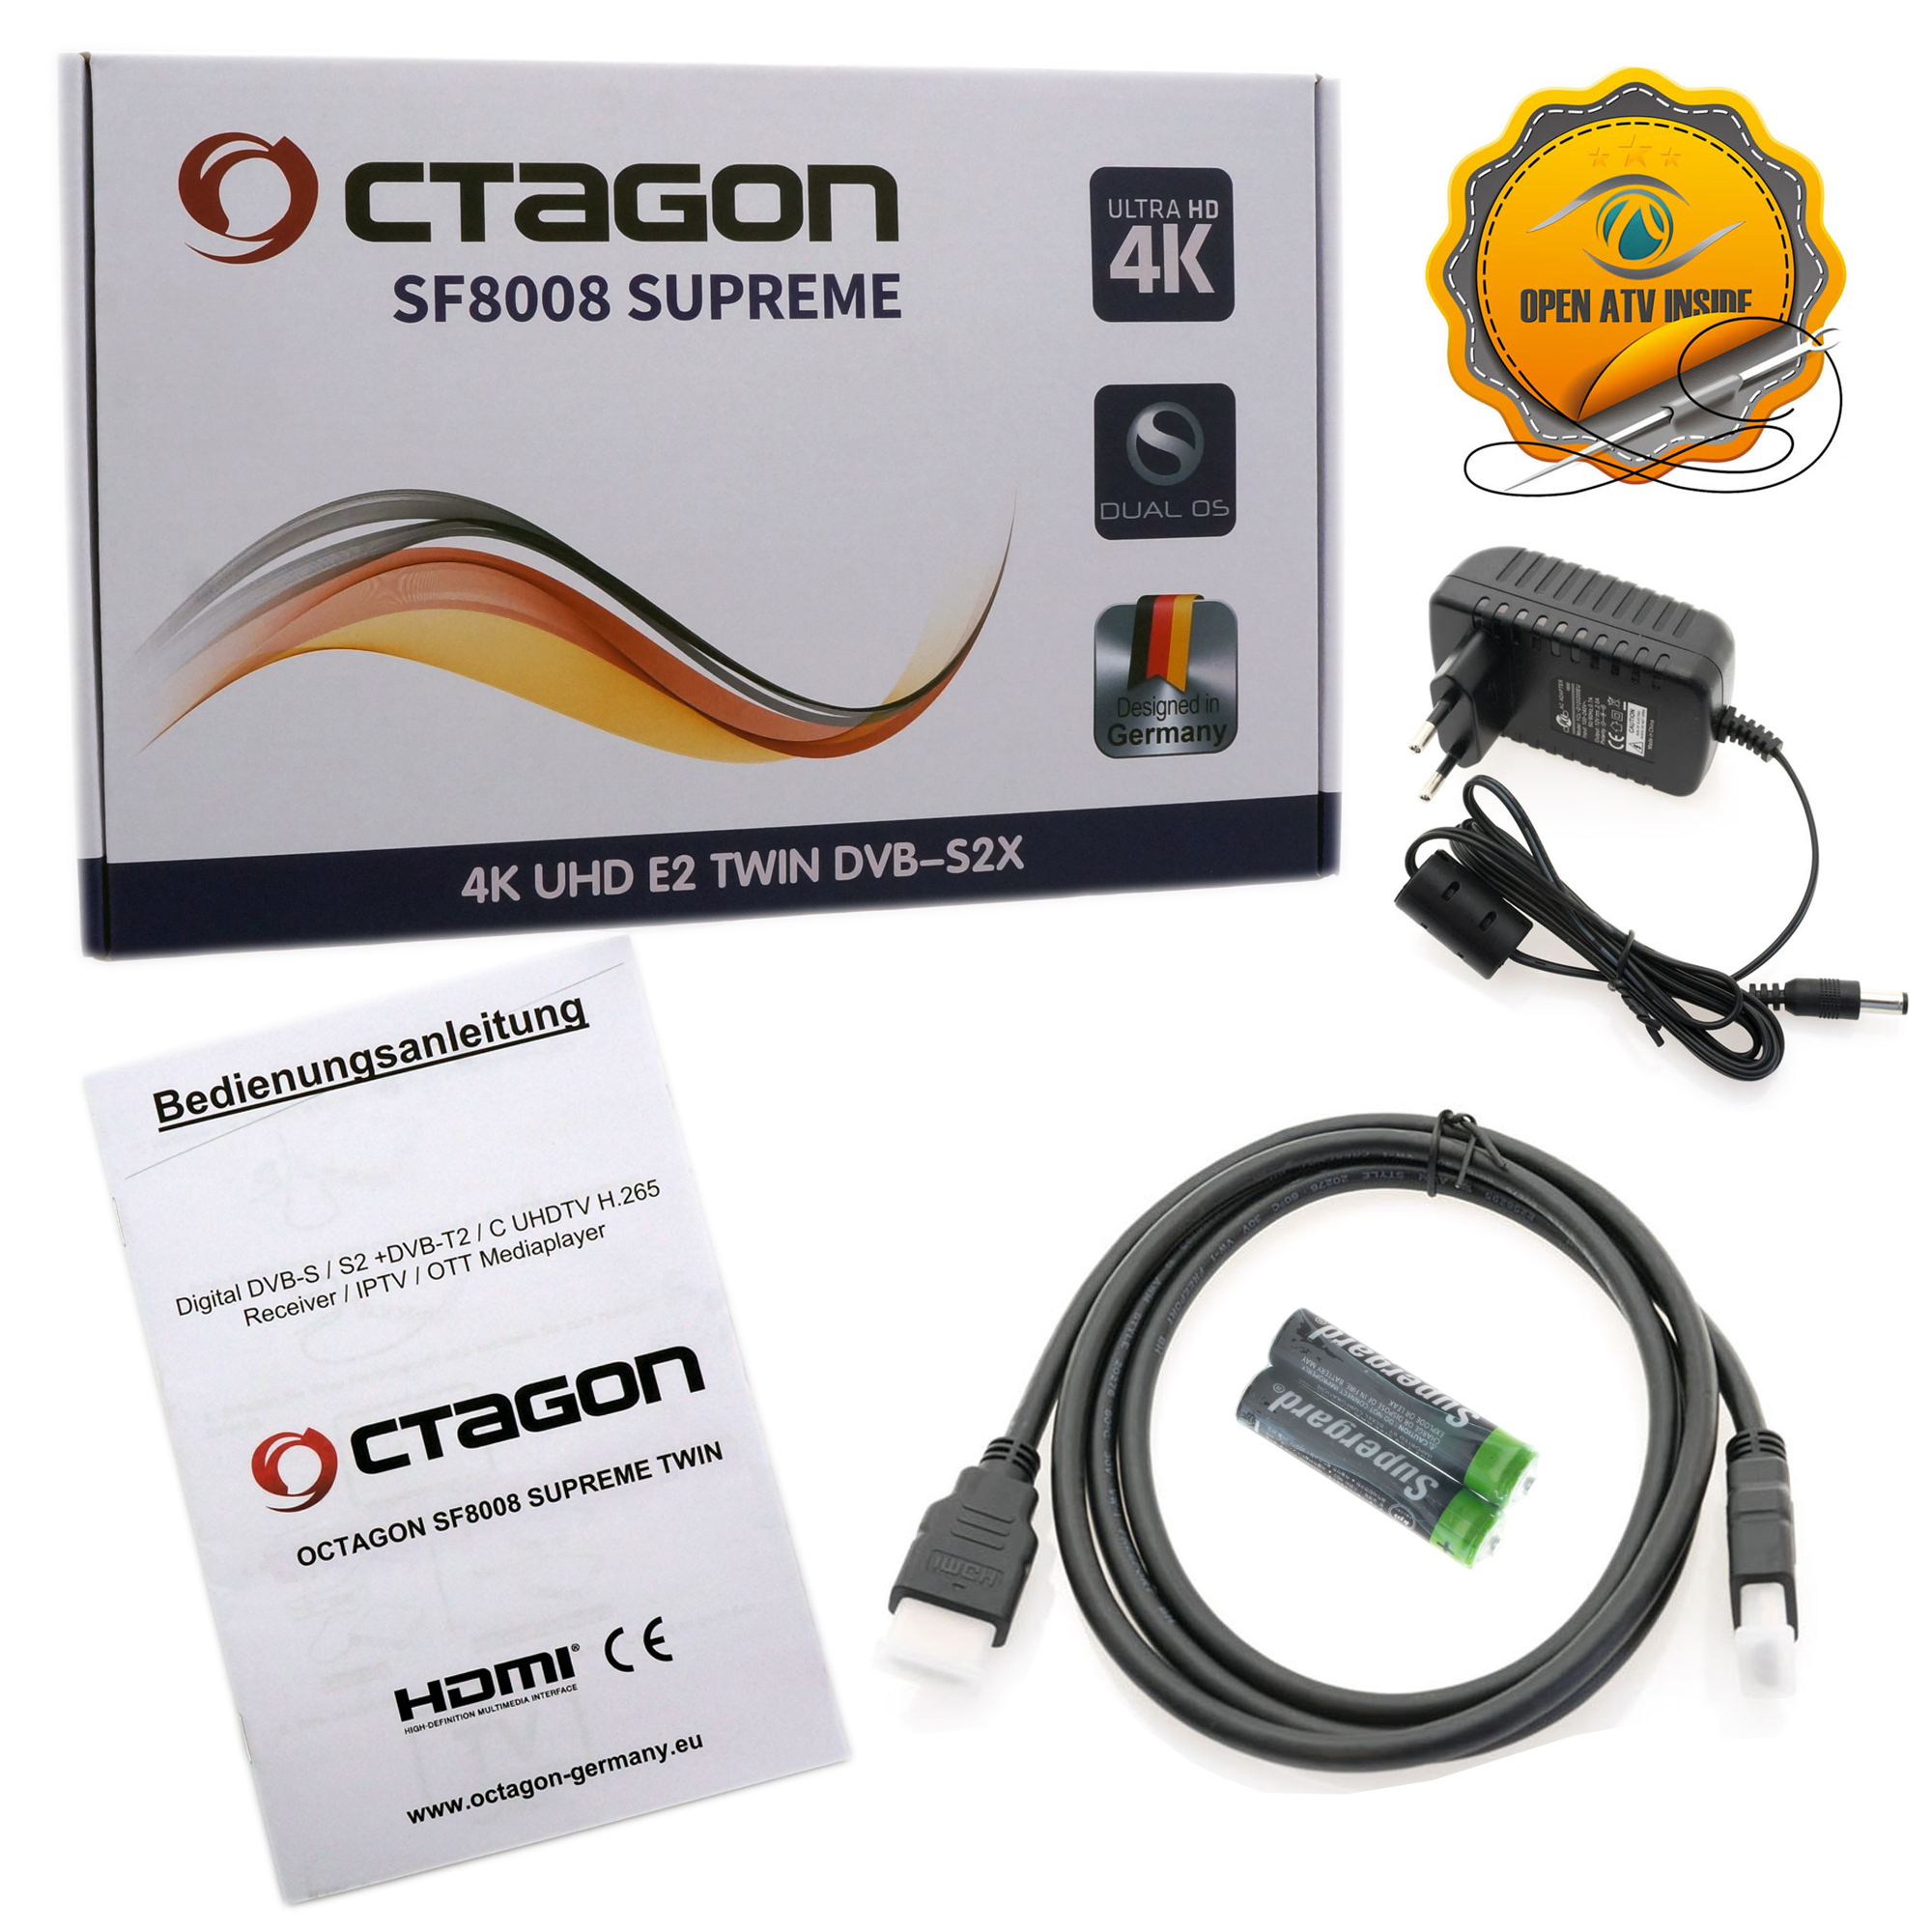 OCTAGON SF8008 Supreme Schwarz) (PVR-Funktion, Twin 512GB Twin Sat-Receiver Tuner